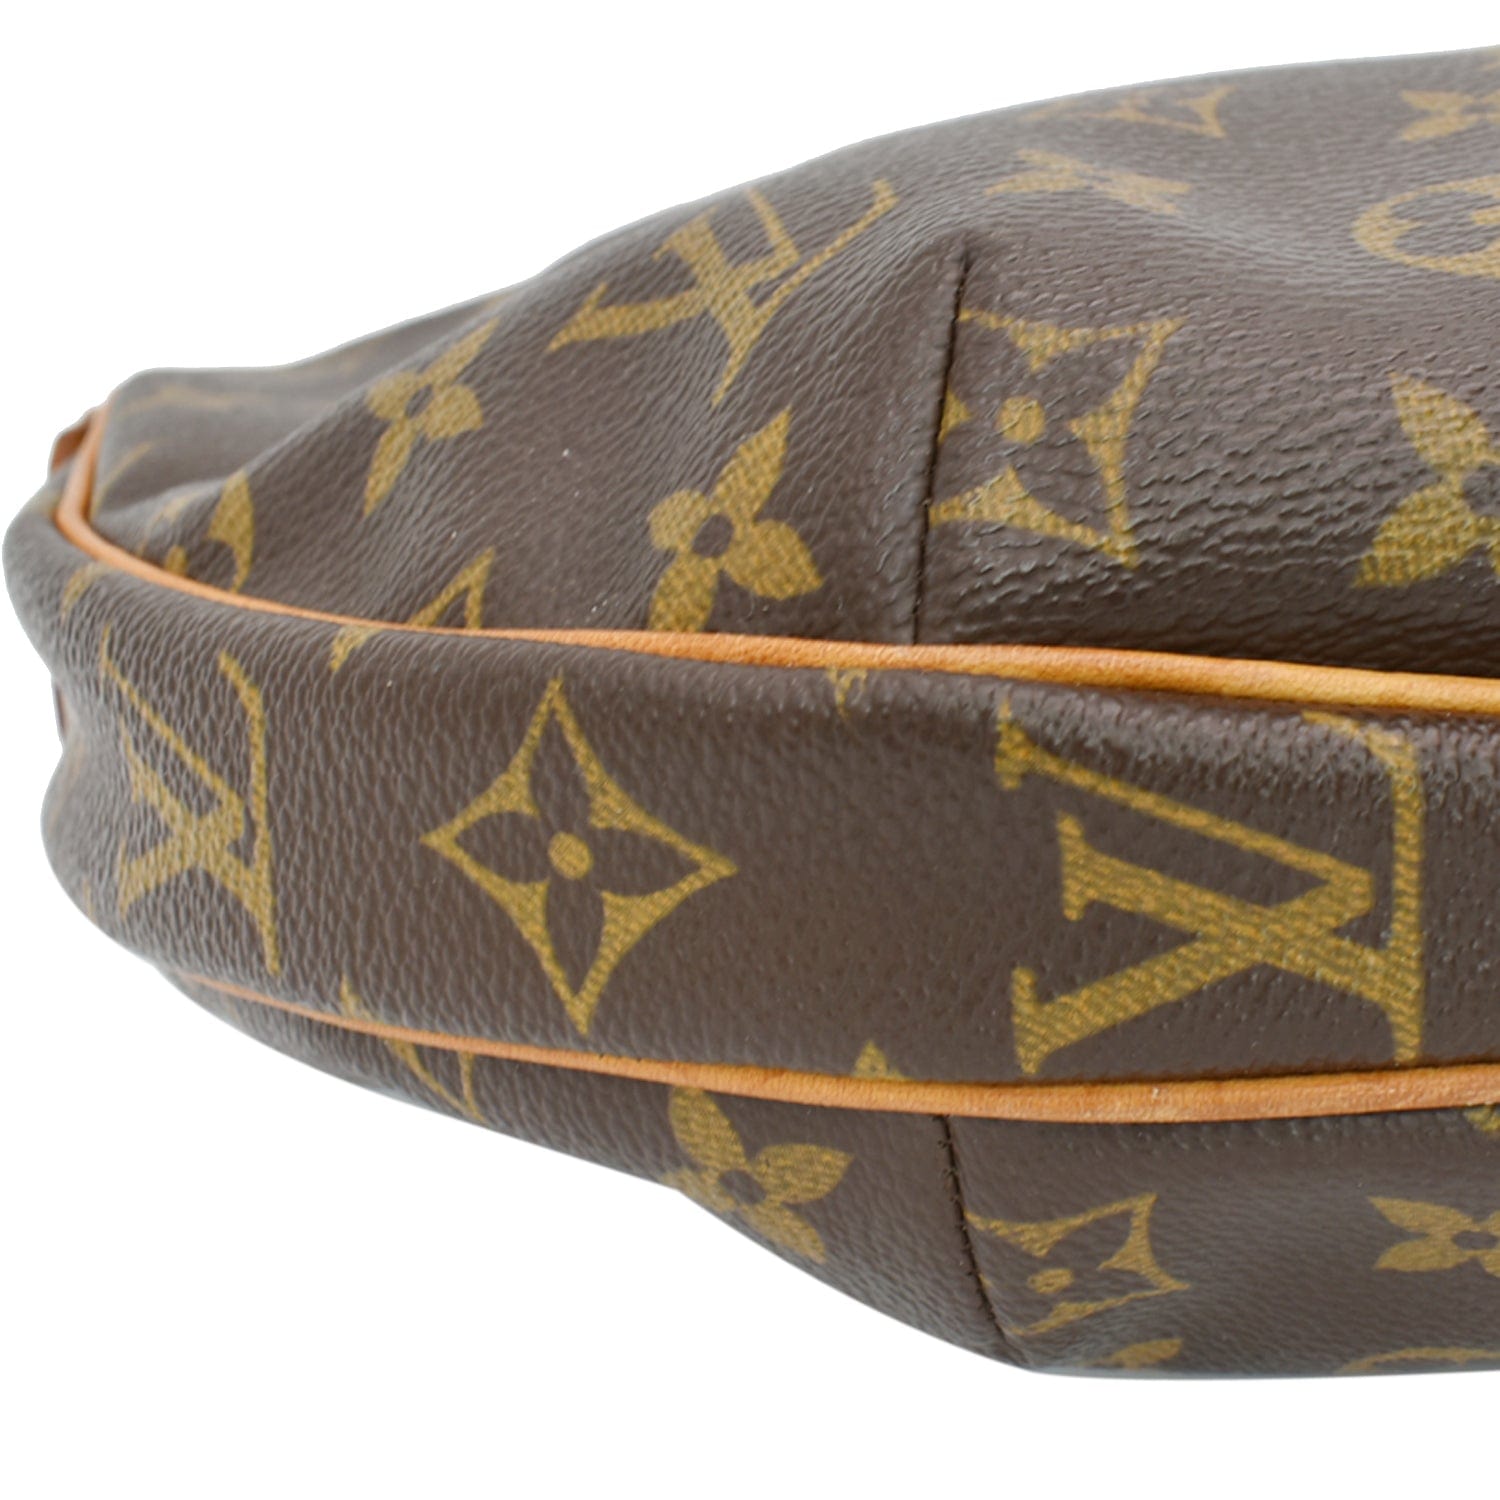 Brown Louis Vuitton Monogram Croissant MM Hobo Bag – Designer Revival